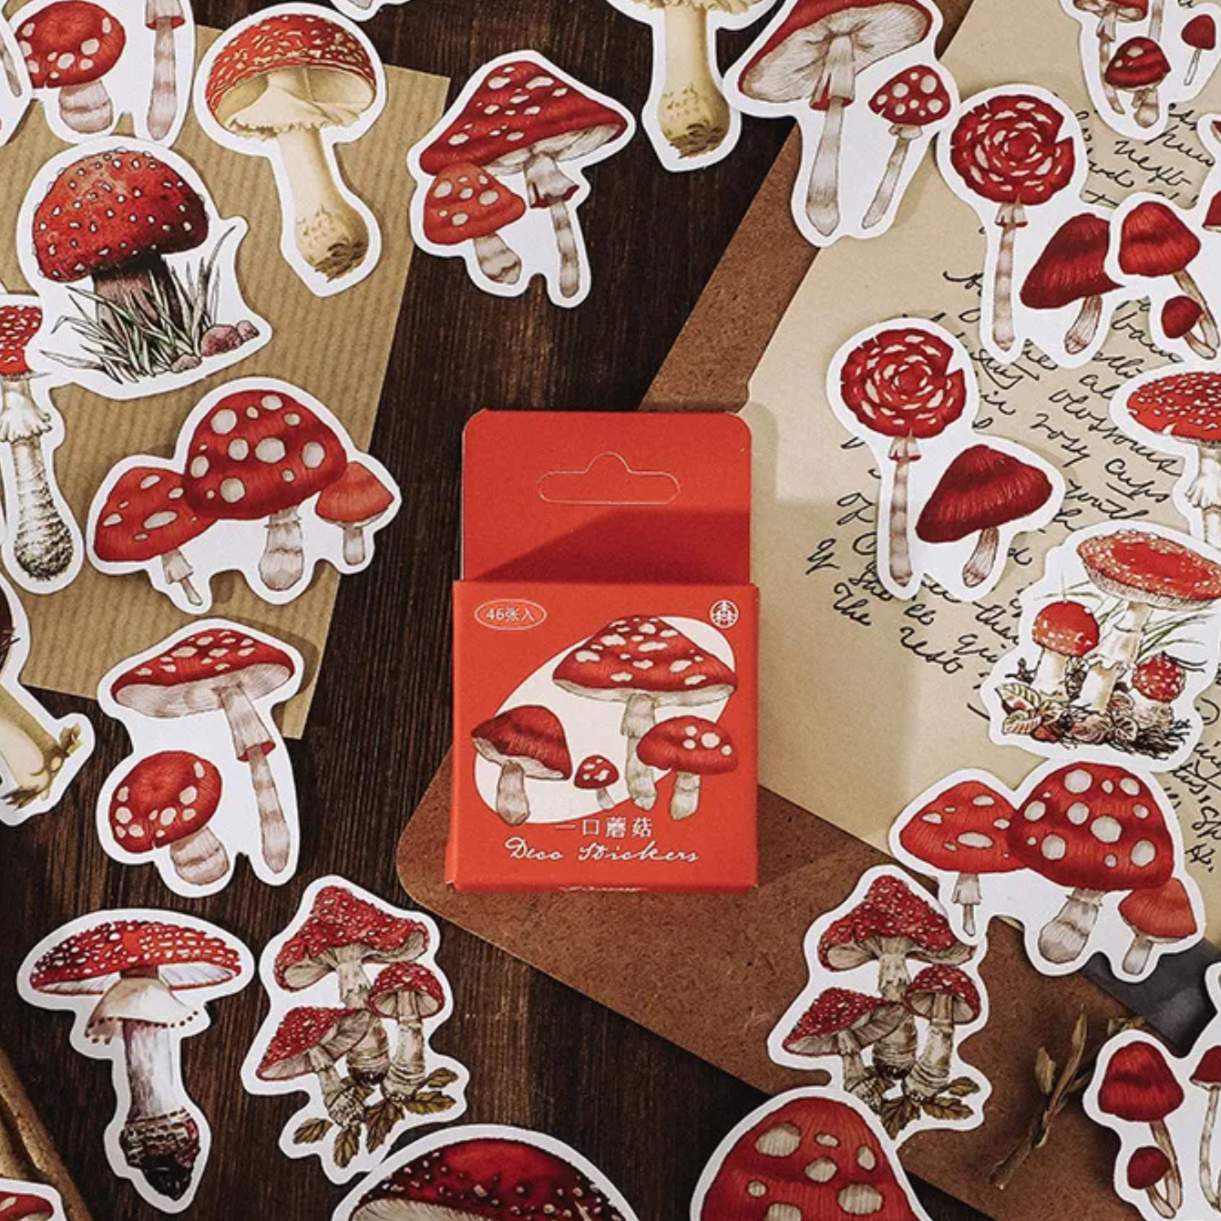 Dico Mushroom Stickers - pack of 45